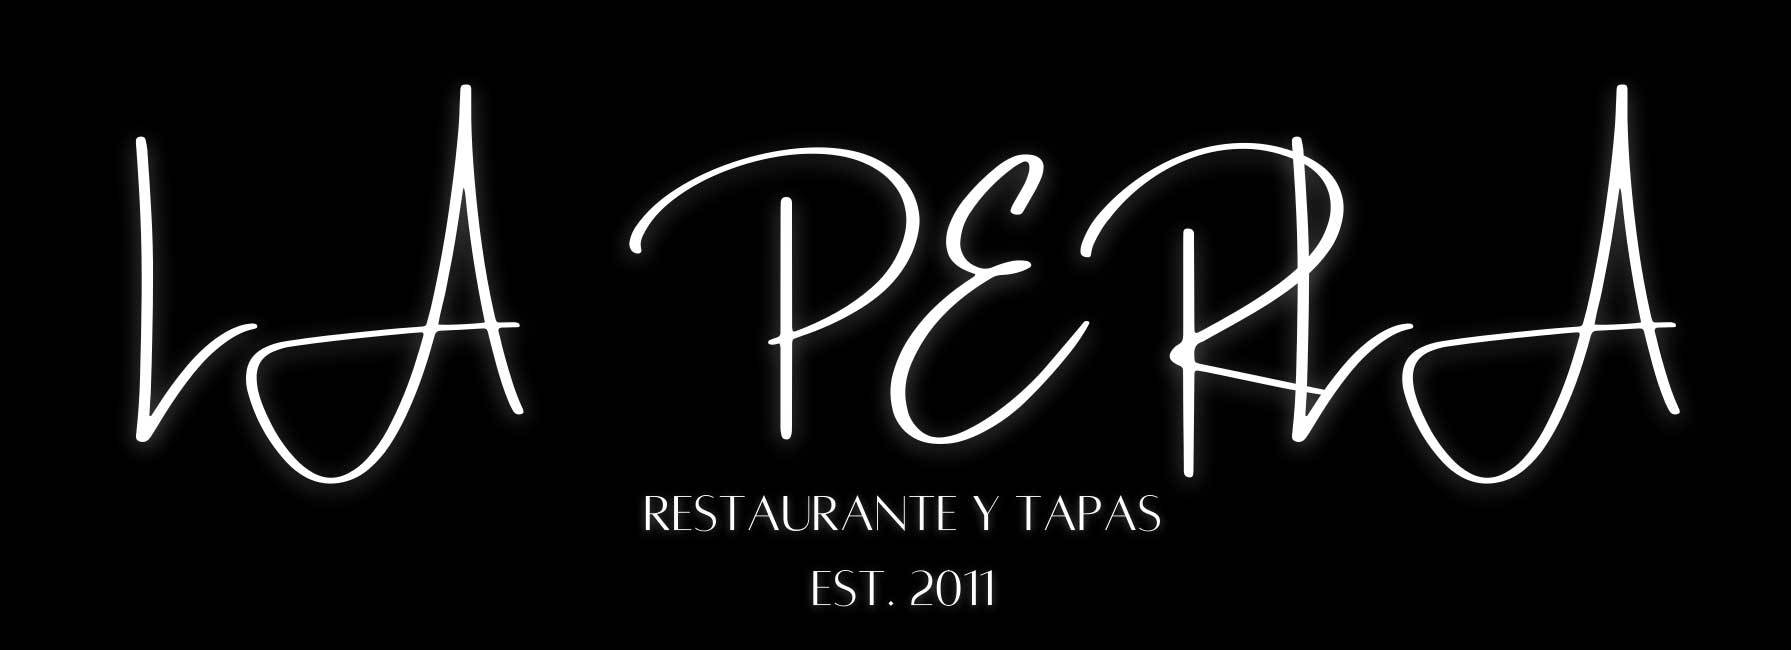 Hobart cooperar Deshacer Contact Us - La Perla - Restaurant in Bath - Tapas Restaurant